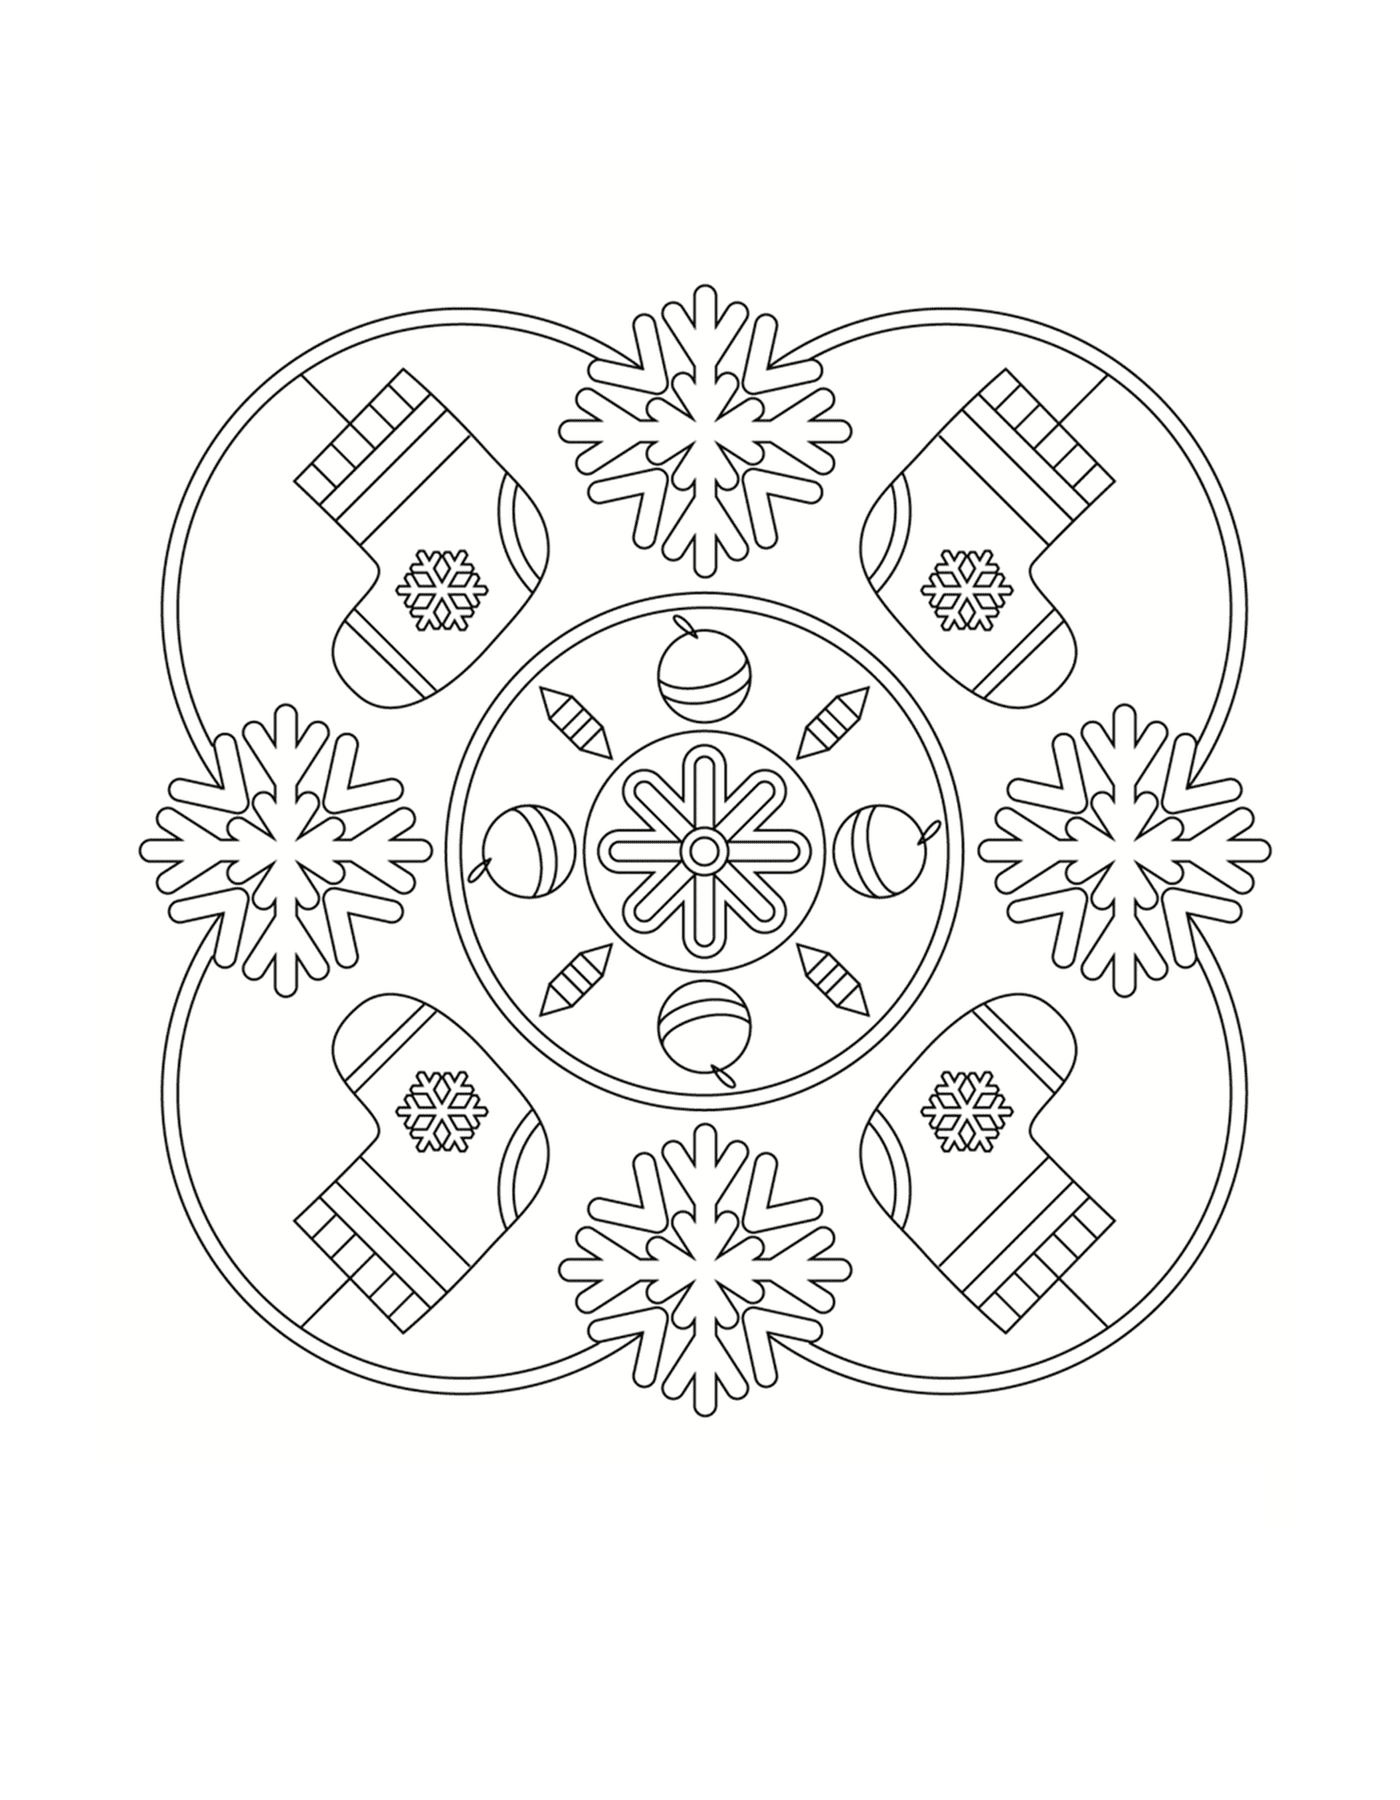  Unique and artistic Mandala 